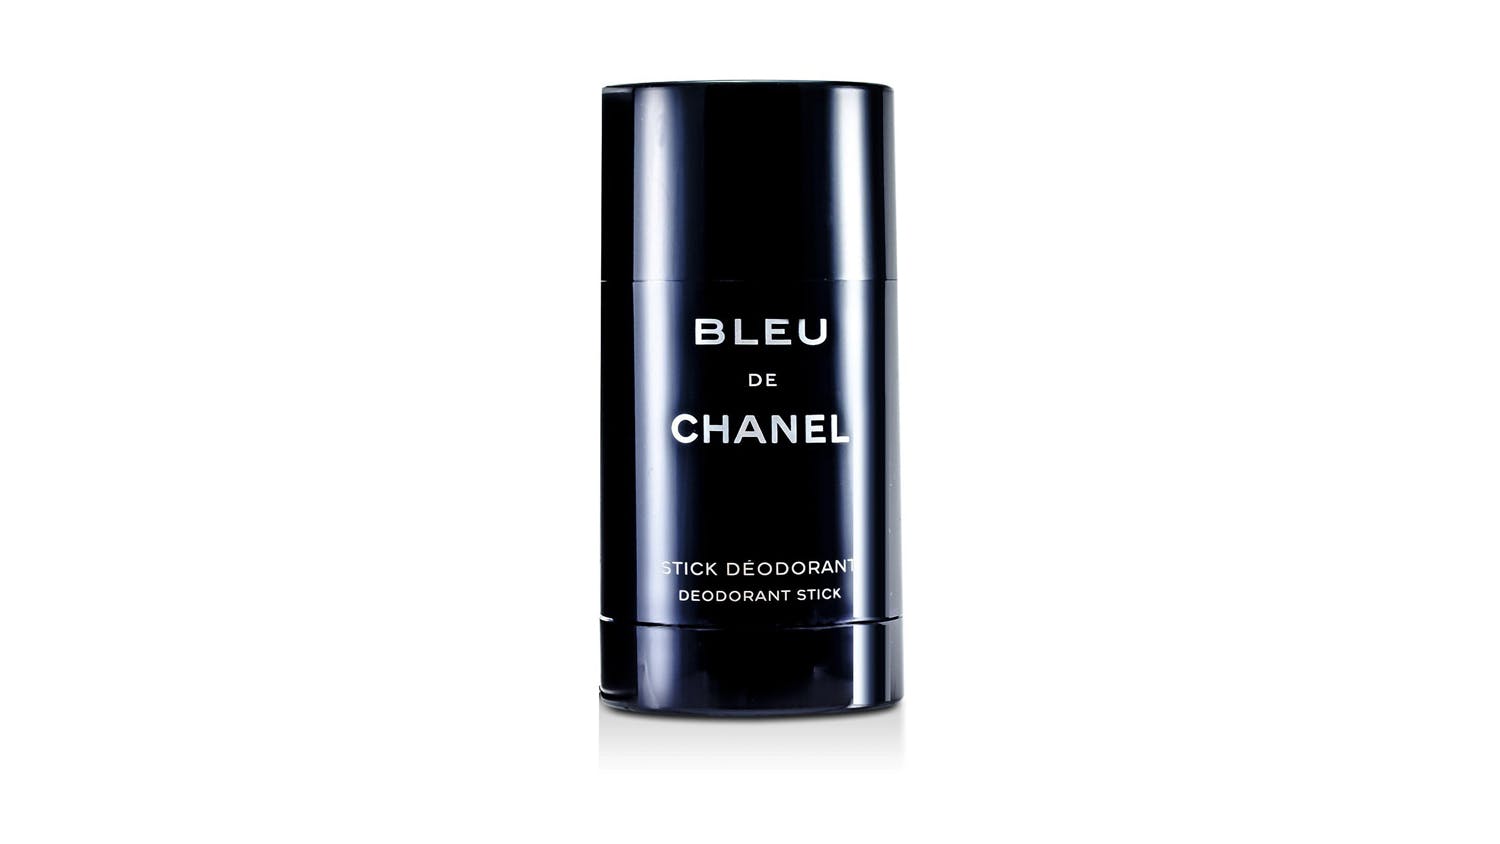 Bleu de CHANEL Deodorant Spray “ not Stick” 100ml New and Sealed Duty Free